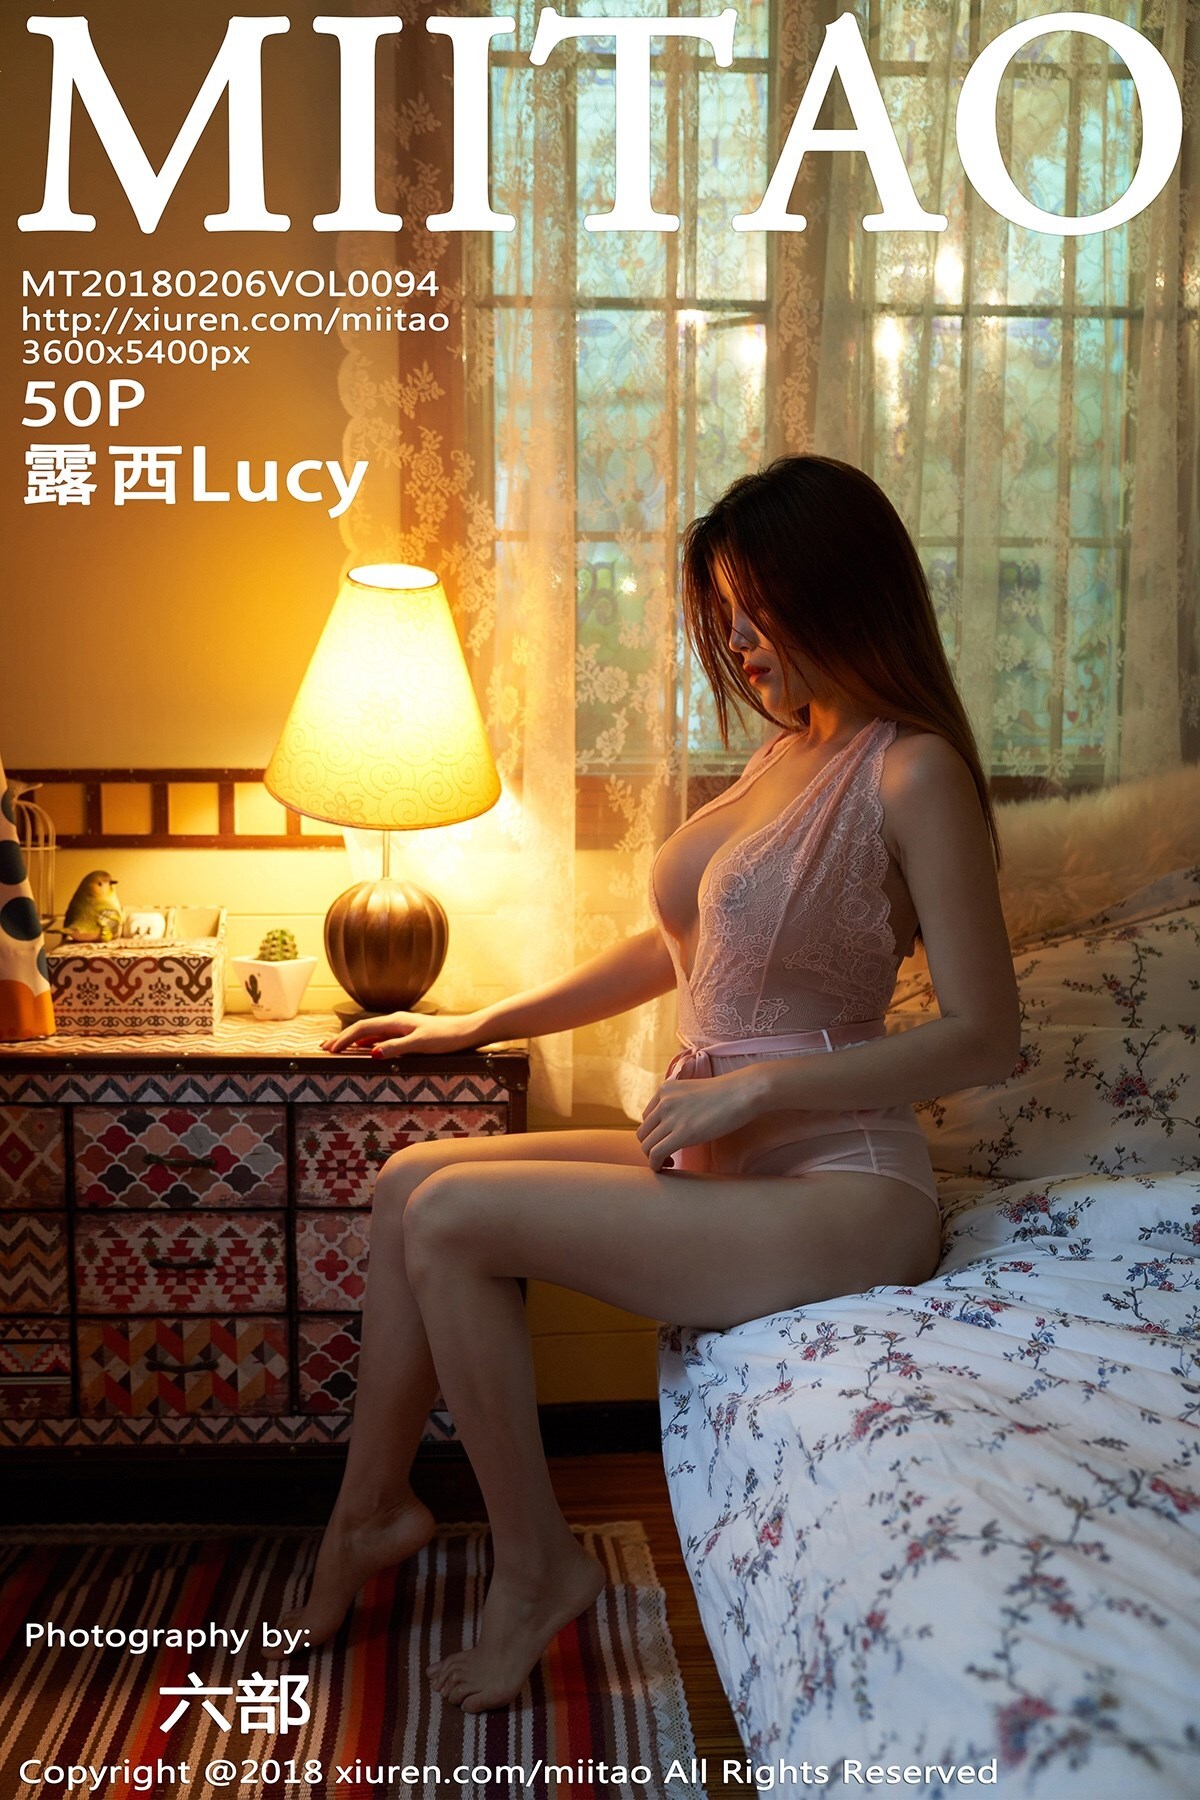 [Mitao peach club] 2018.02.06 Vol.094 Lucy